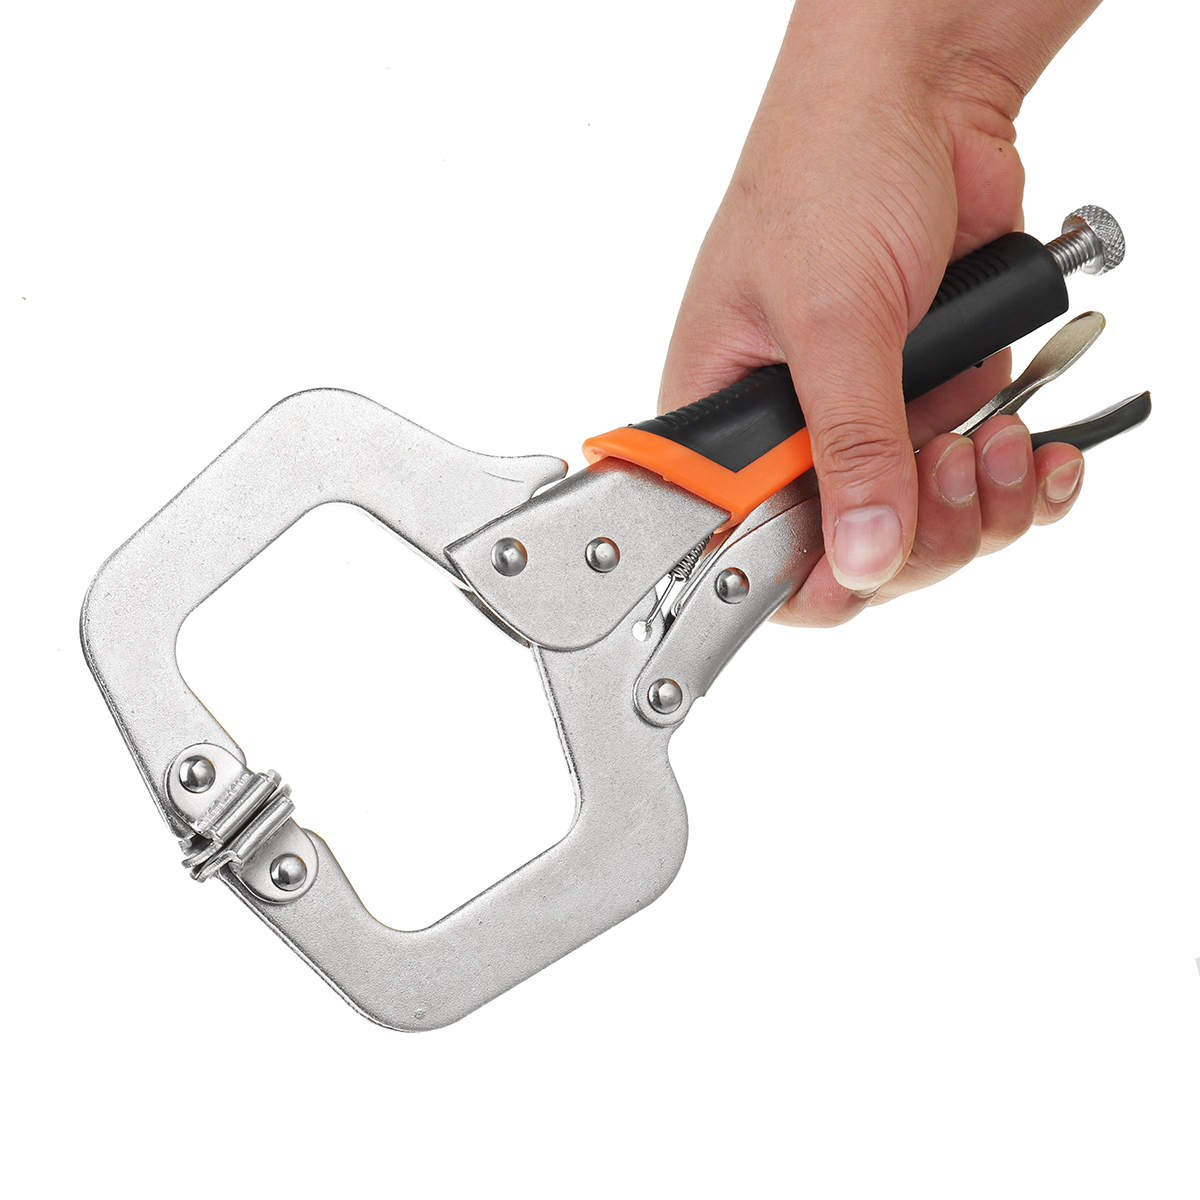 Plastic-Pocket-Hole-Jig-Set-Woodworking-Tools-Welding-C-Clamp-Locking-Plier-Tenon-Locator-1662682-9